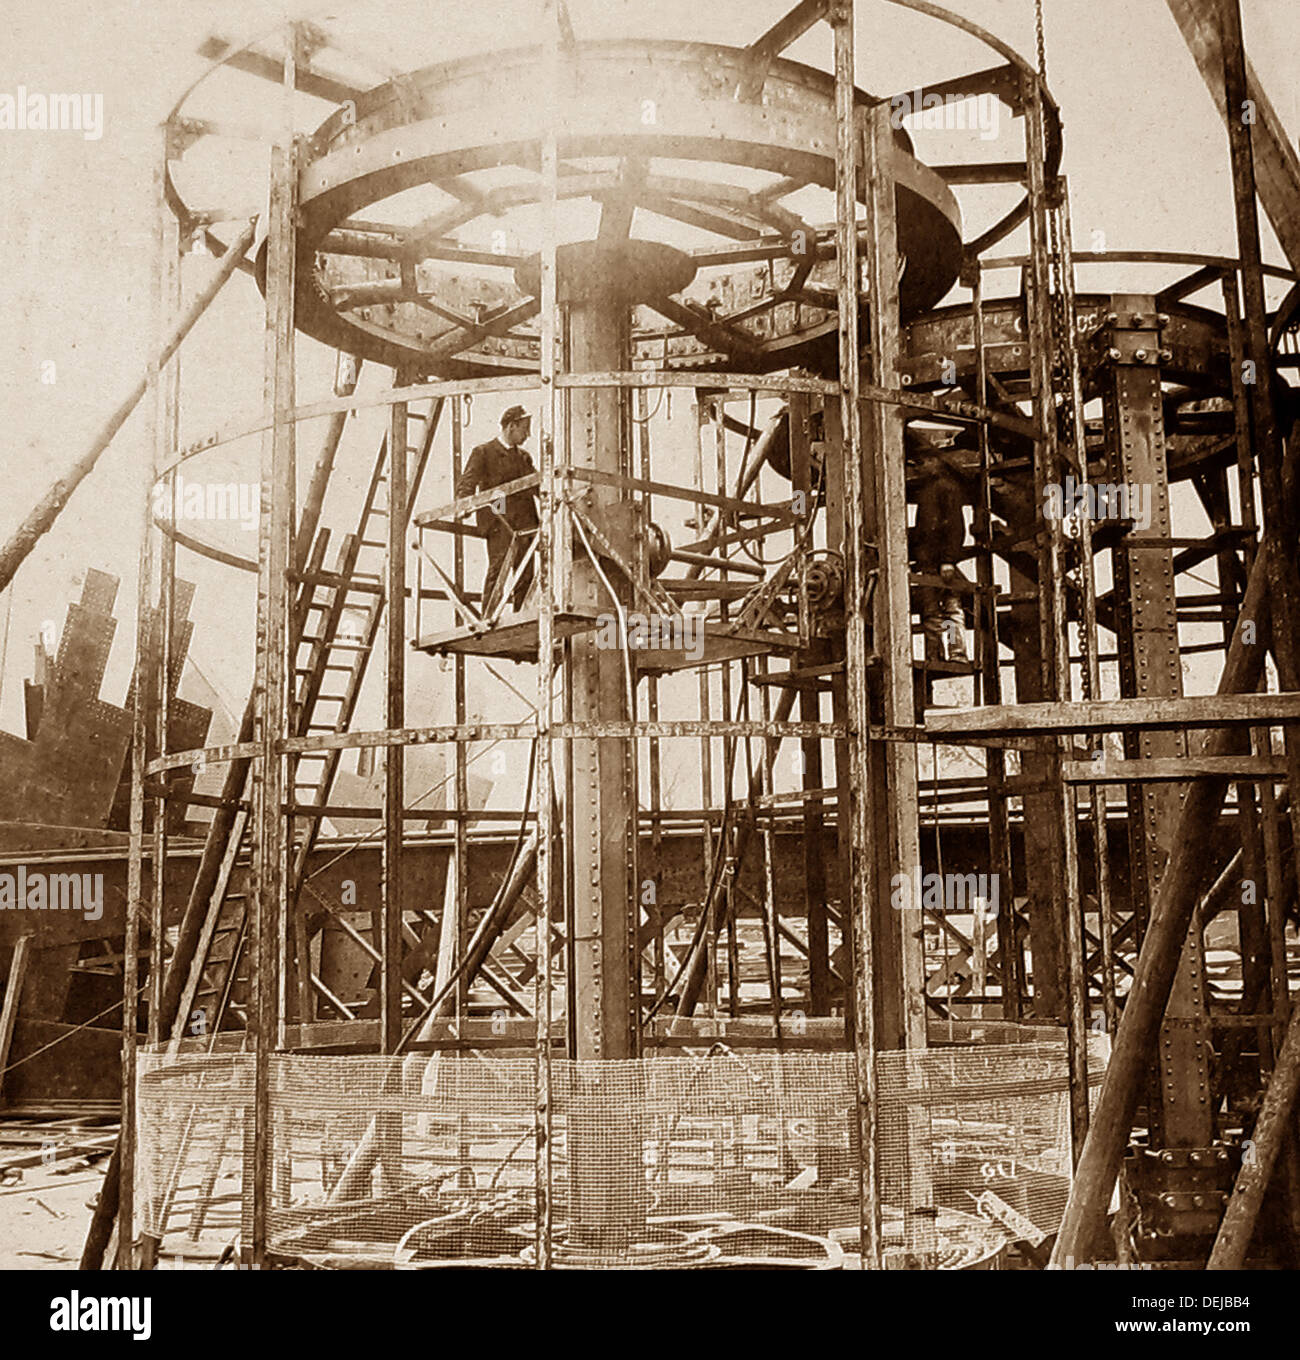 Building the Forth Railway Bridge - riveting machine - Victorian period Stock Photo